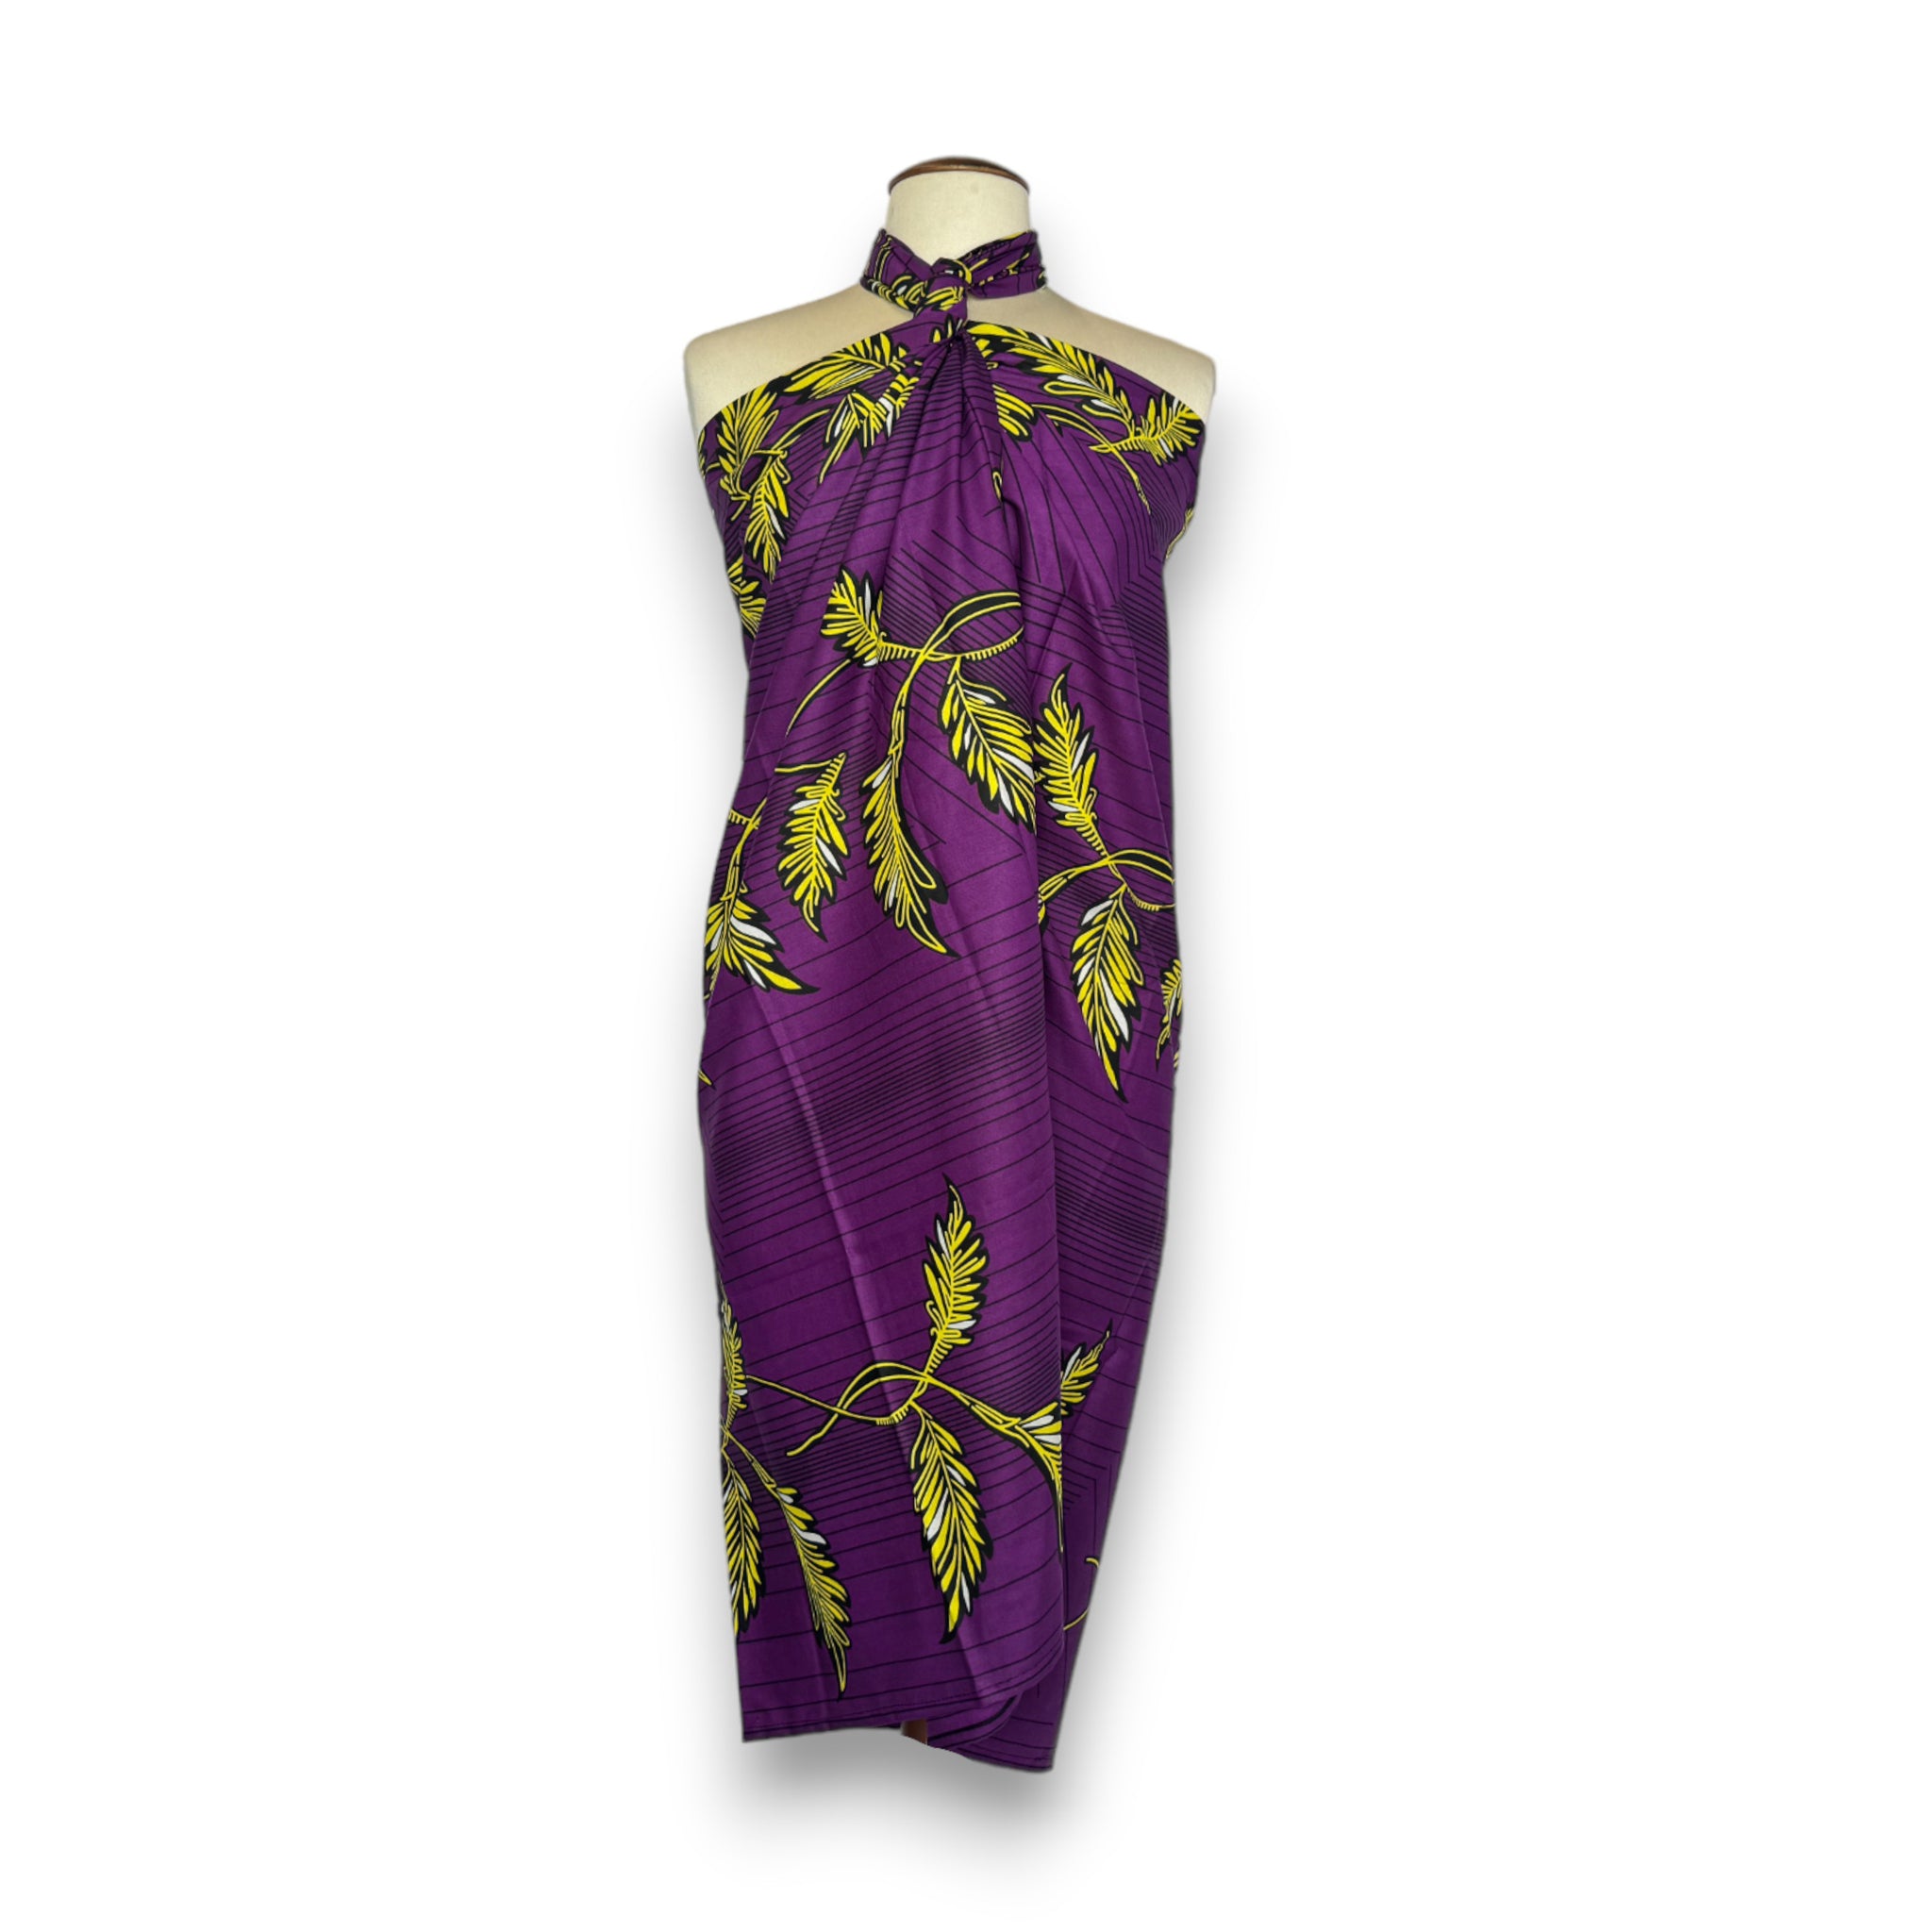 Sarong / pareo - Cotton Beachwear wrap skirt / baby carrier wrap - Purple leafs